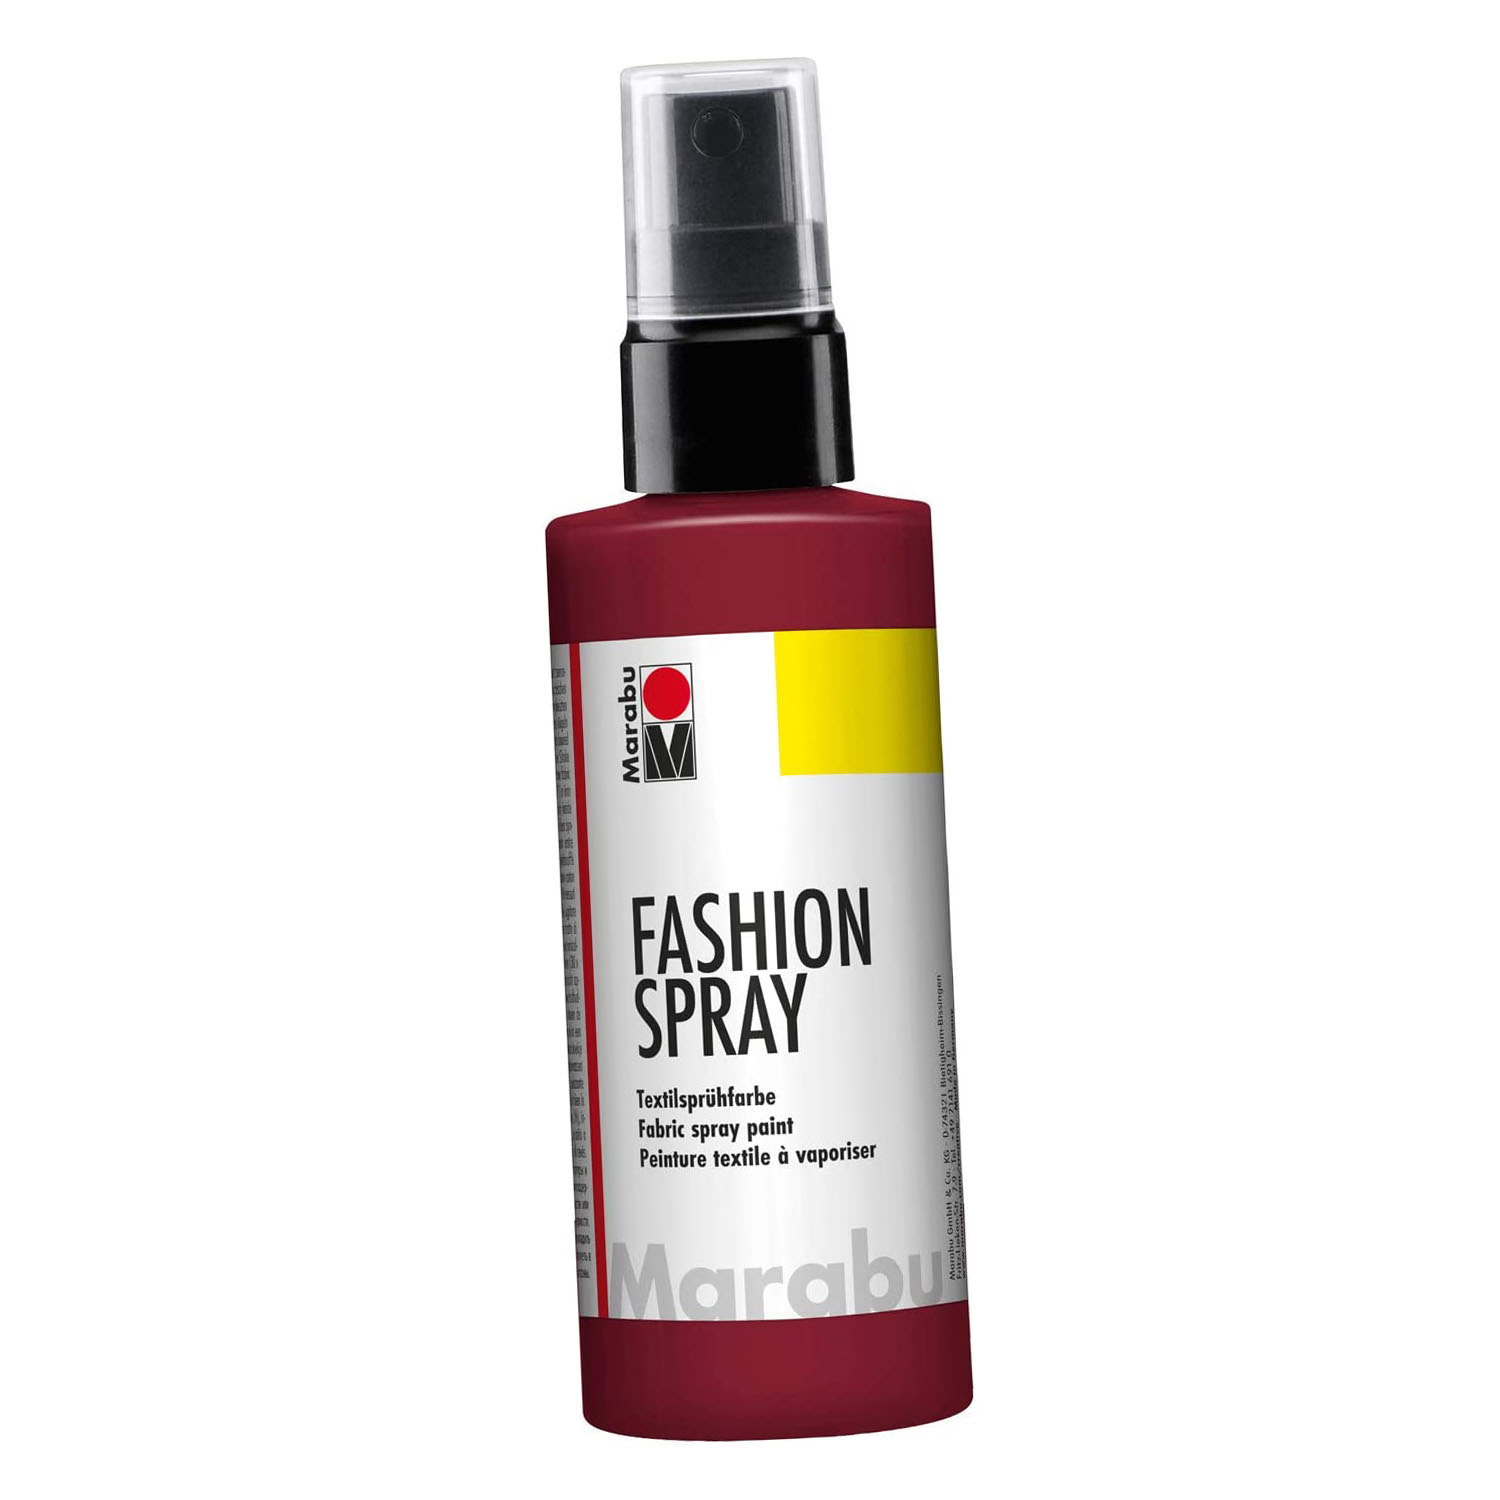 Marabu Textilsprhfarbe Fashion-Spray, bordeaux, 100 ml